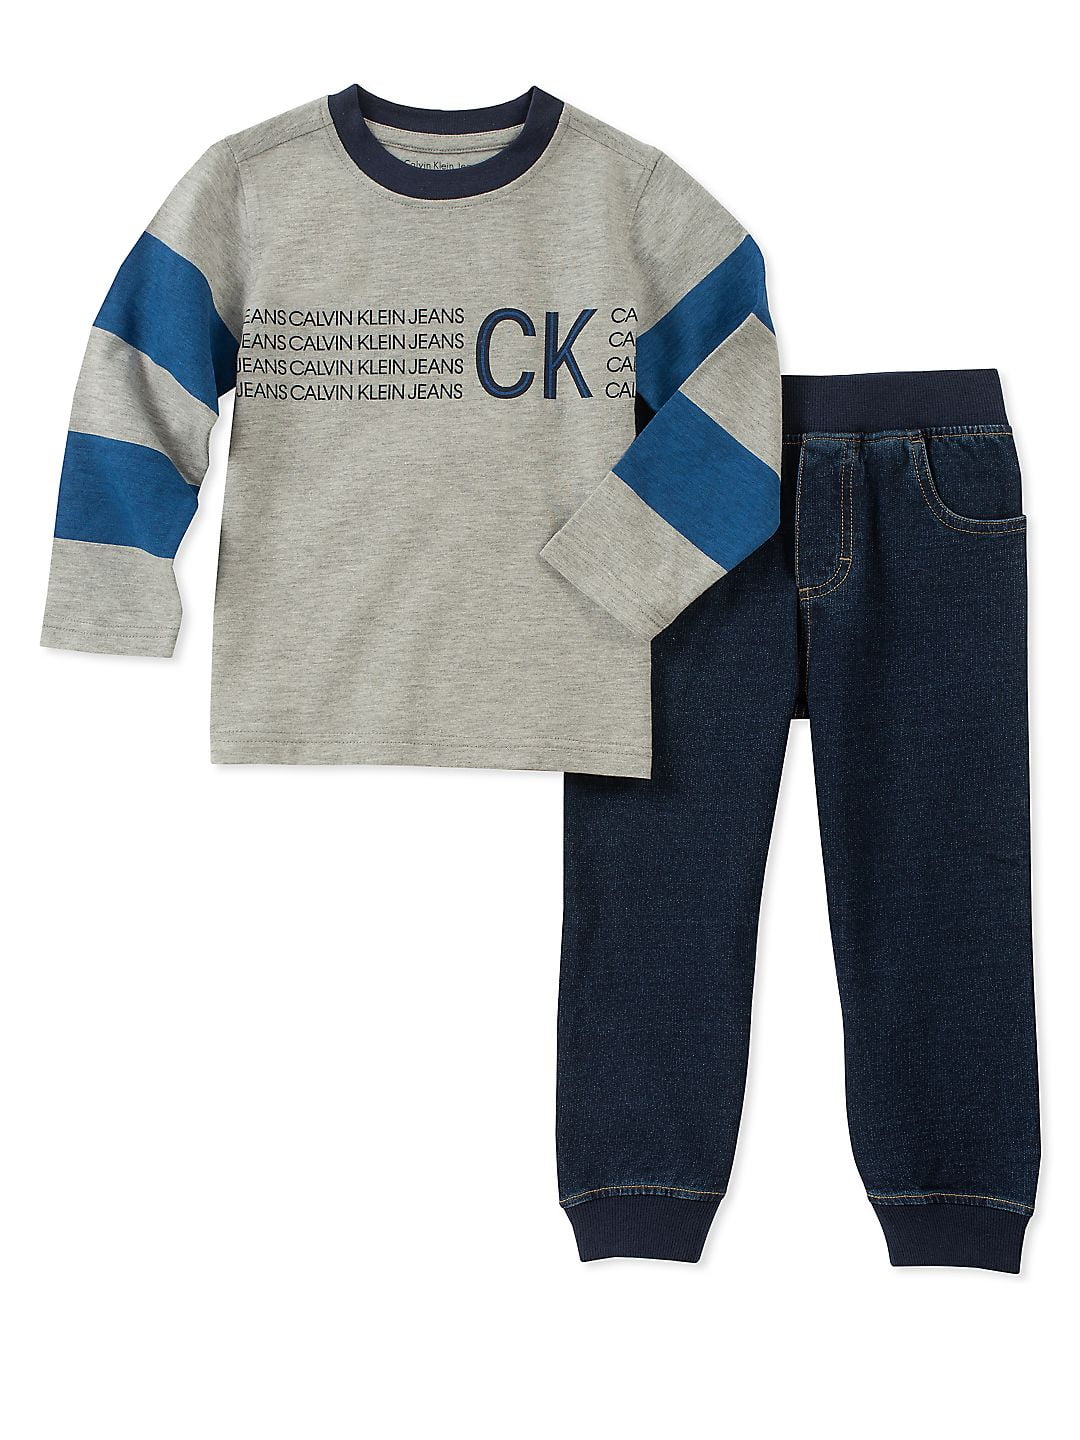 Calvin Klein - Calvin Klein Kids Boys 2T-4T Long Sleeve Jogger Set ...